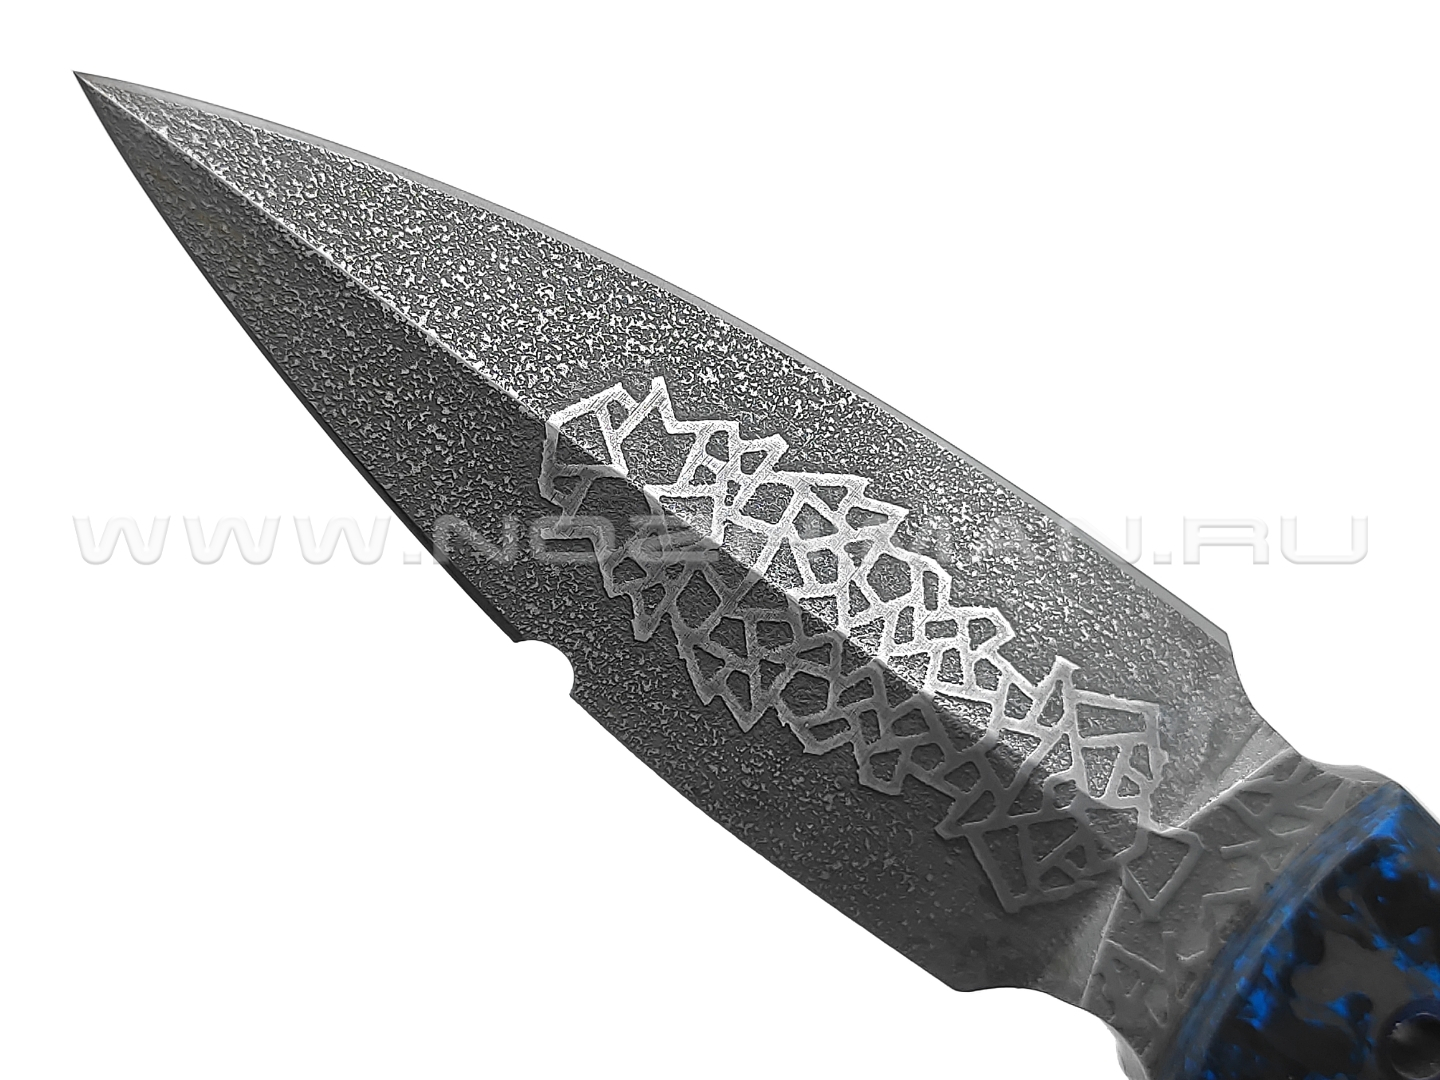 Neyris Knives нож TaoRan сталь CPM 3V, рукоять Carbon fiber blue